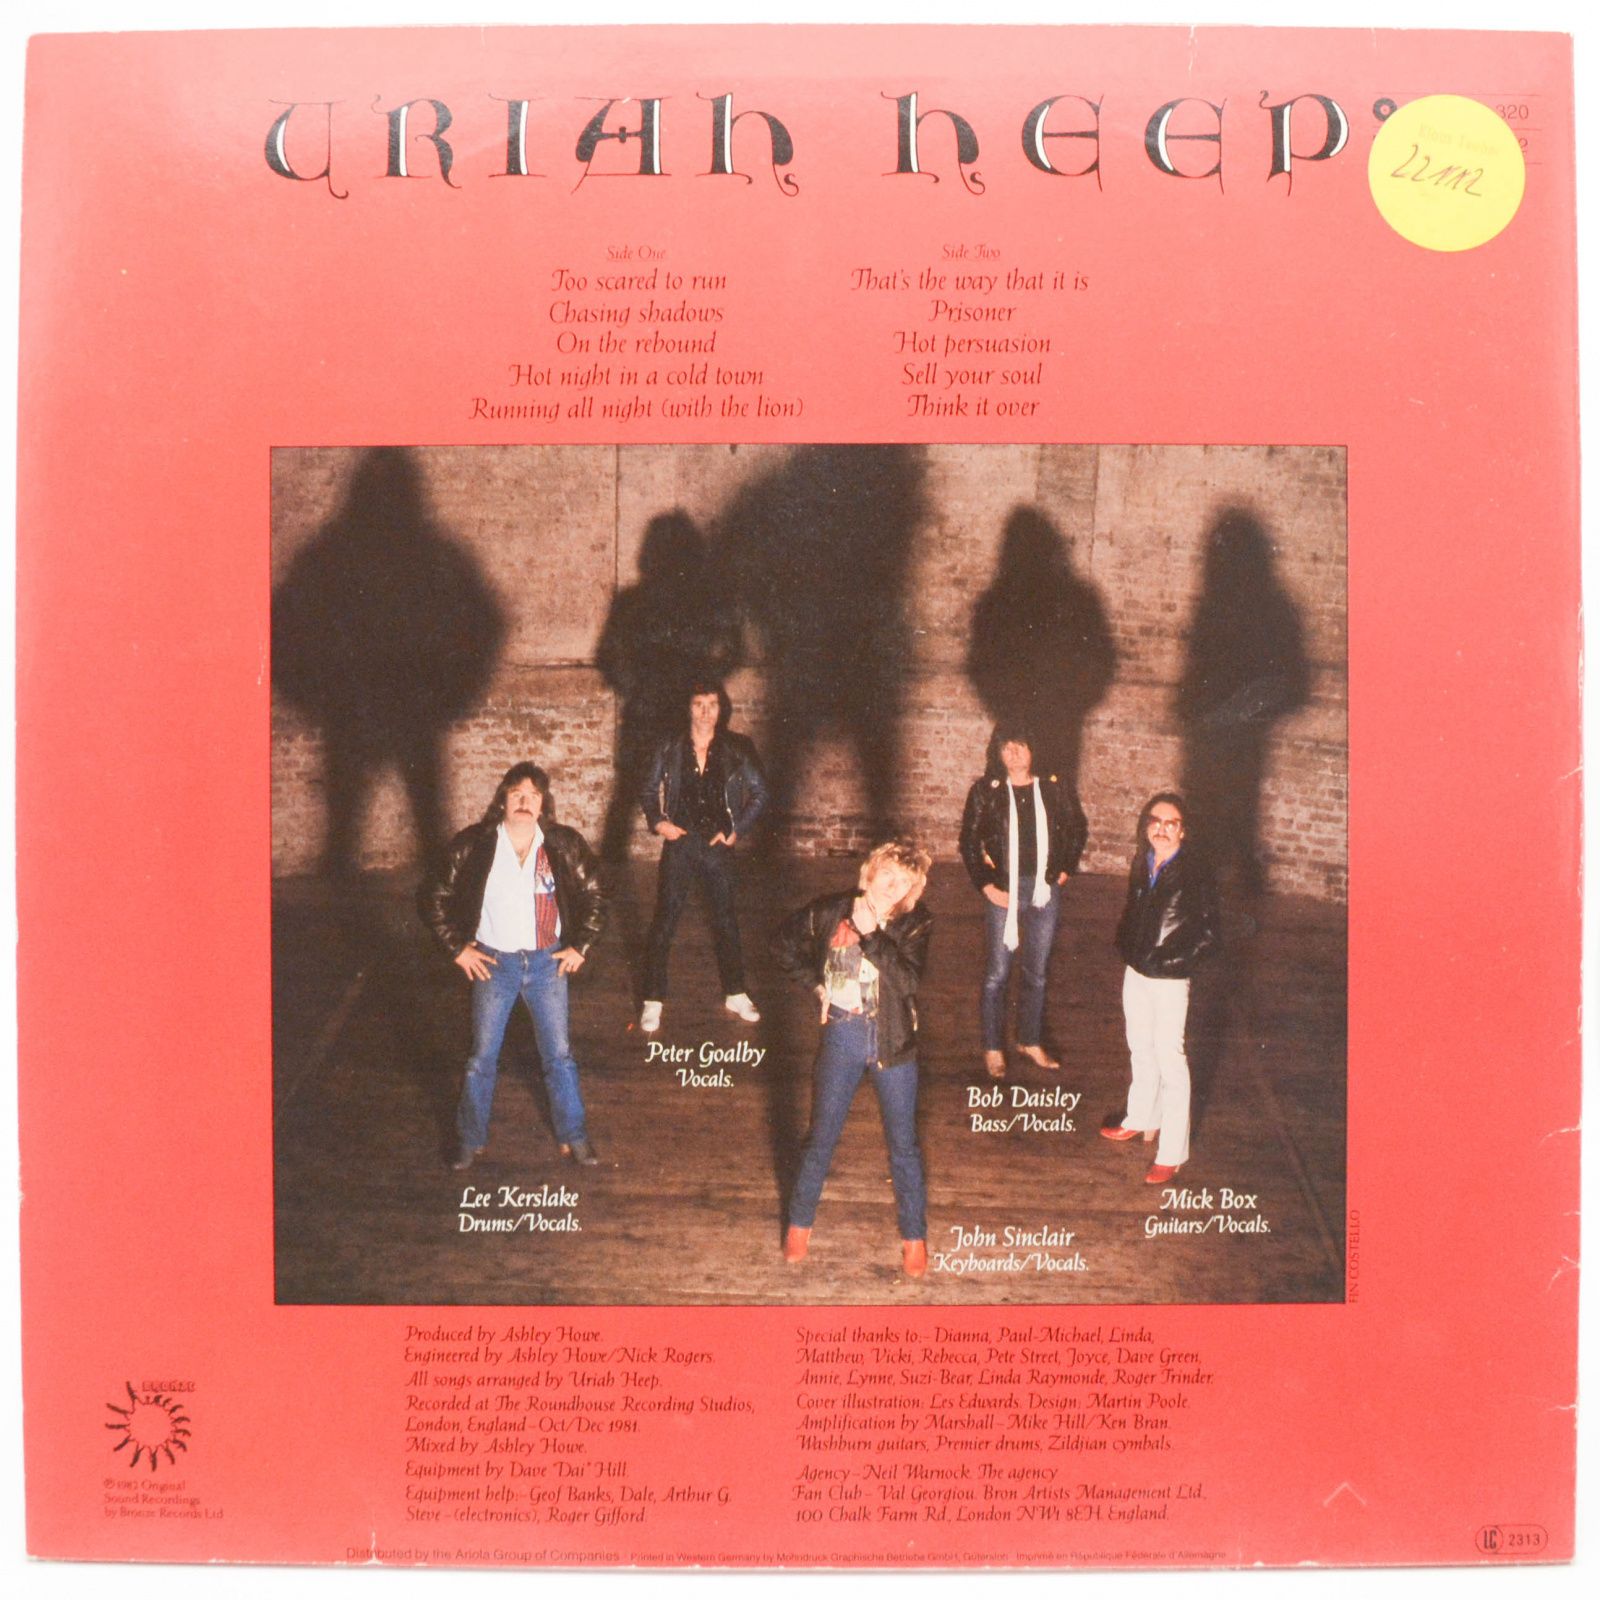 Uriah Heep — Abominog, 1982